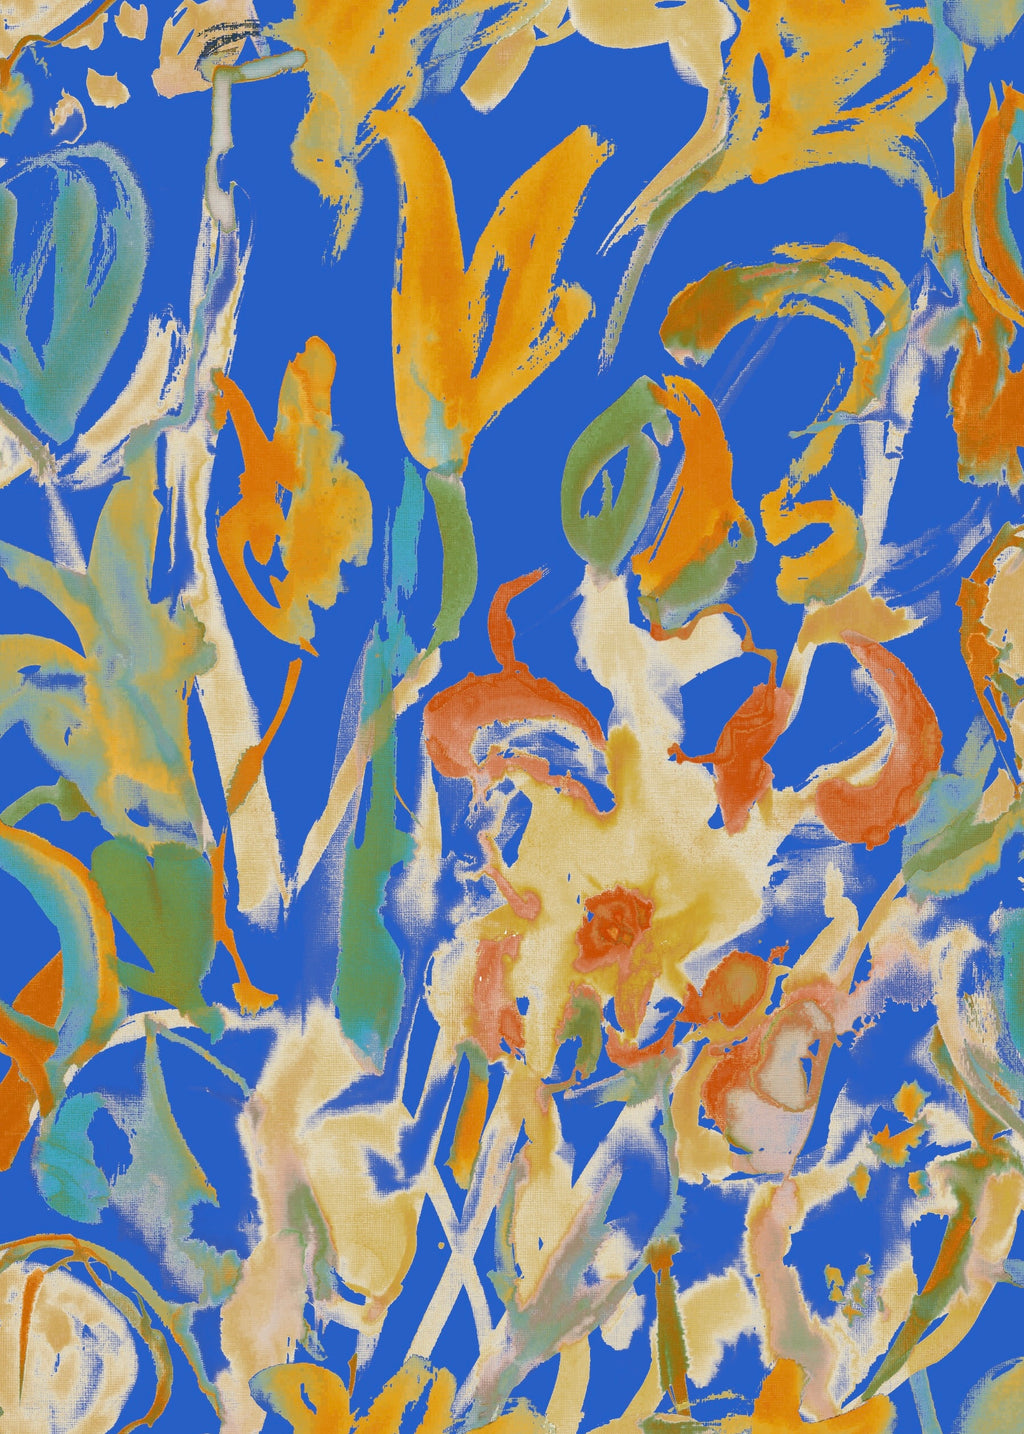 Abstract Watercolour Floral Wallpaper - Bright ultramarine